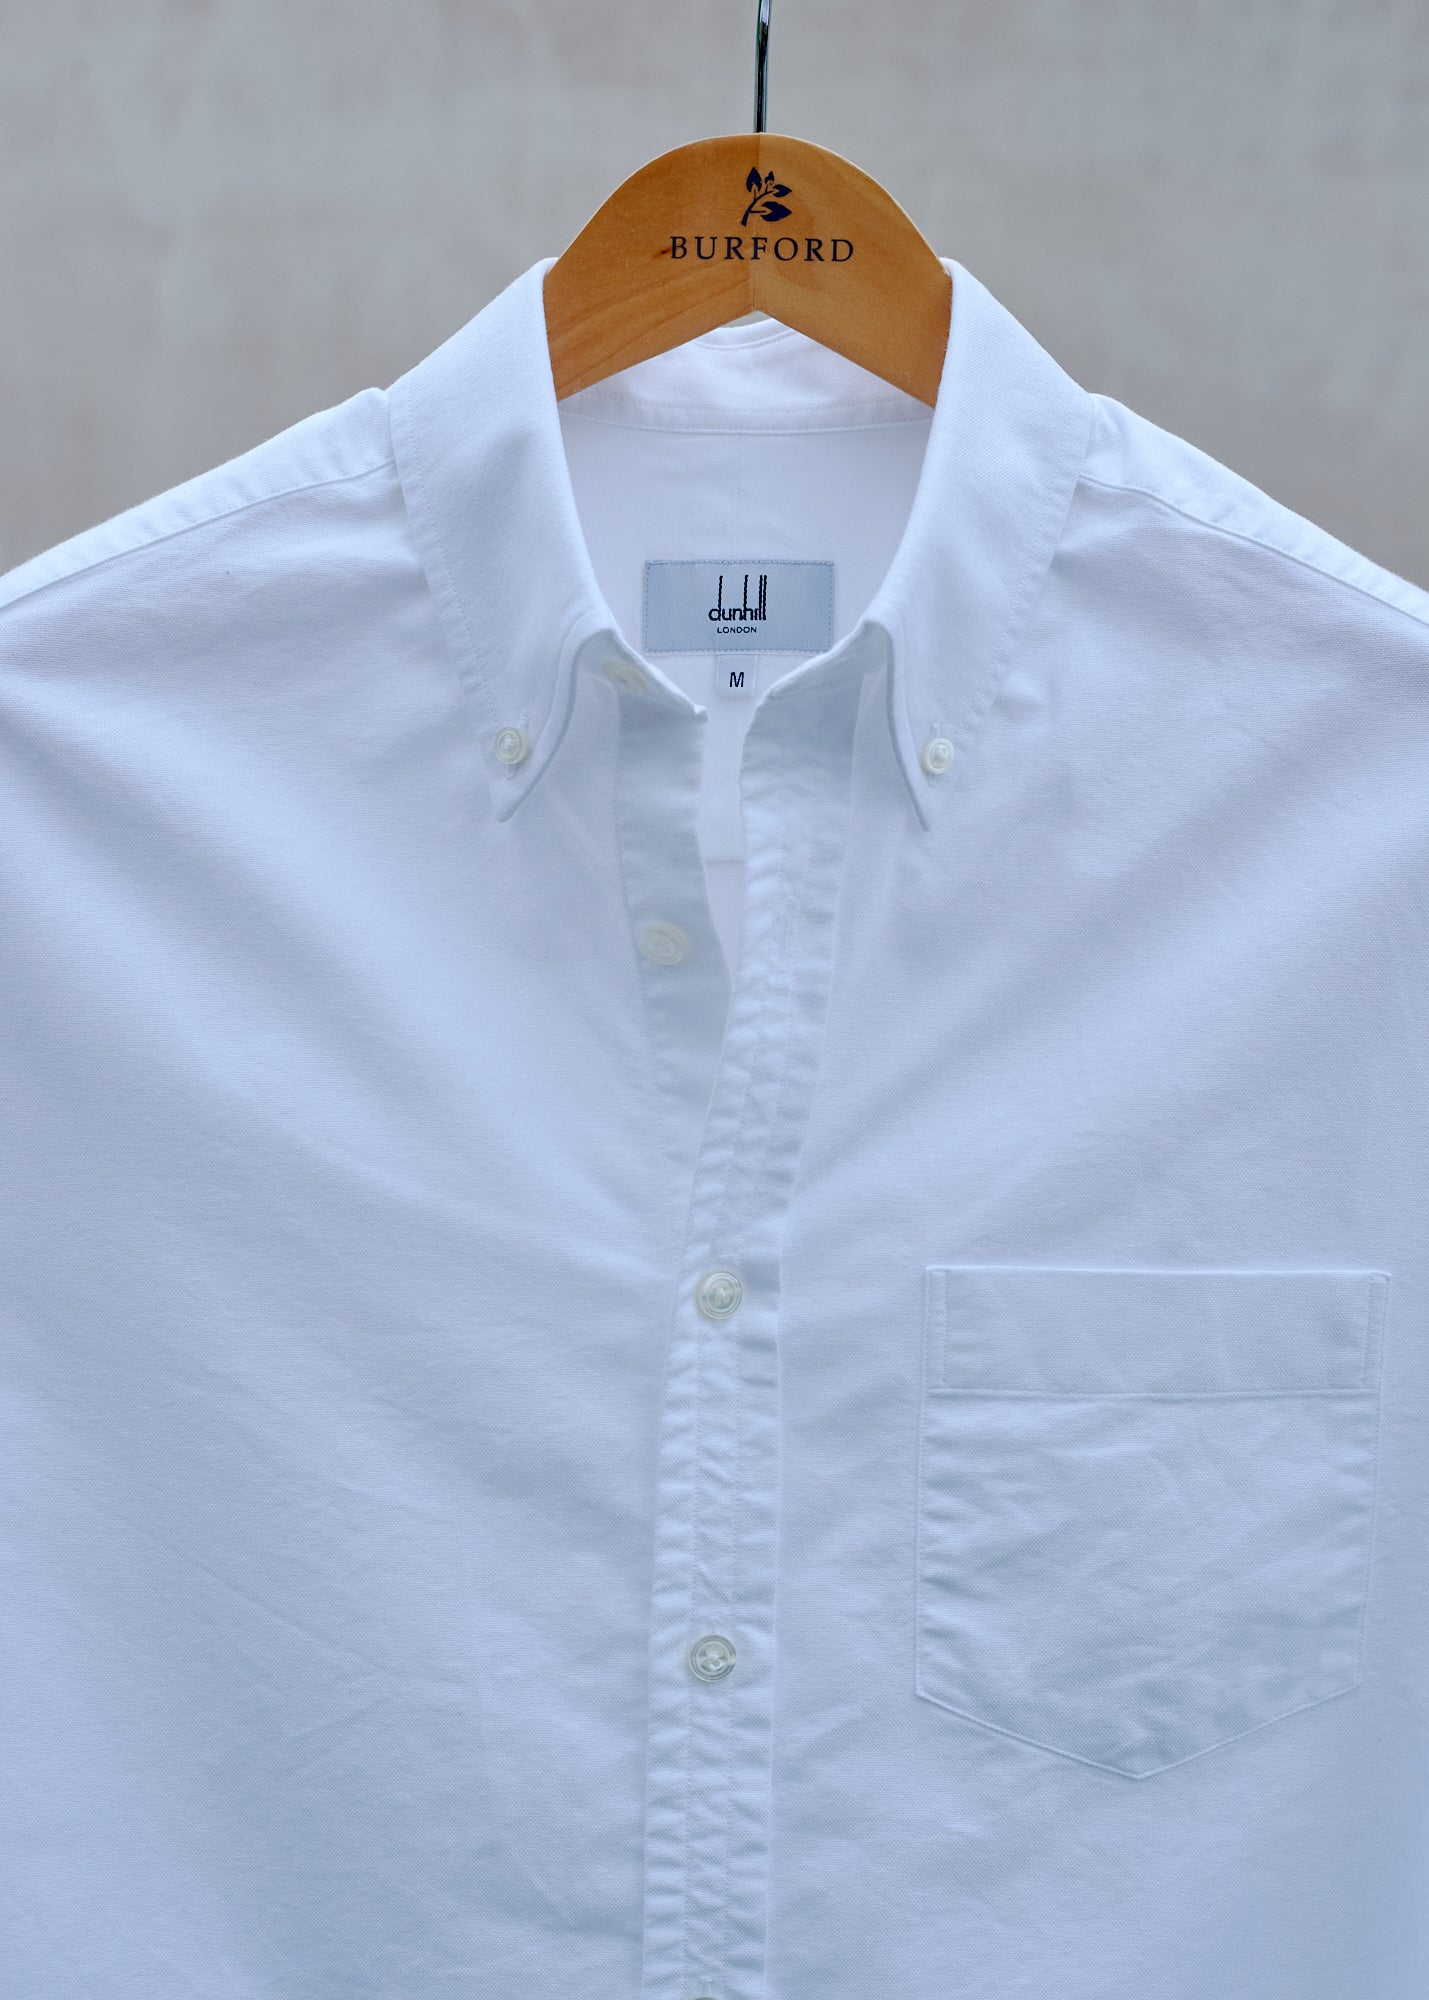 Dunhill White Oxford Cotton Buttondown Shirt - M